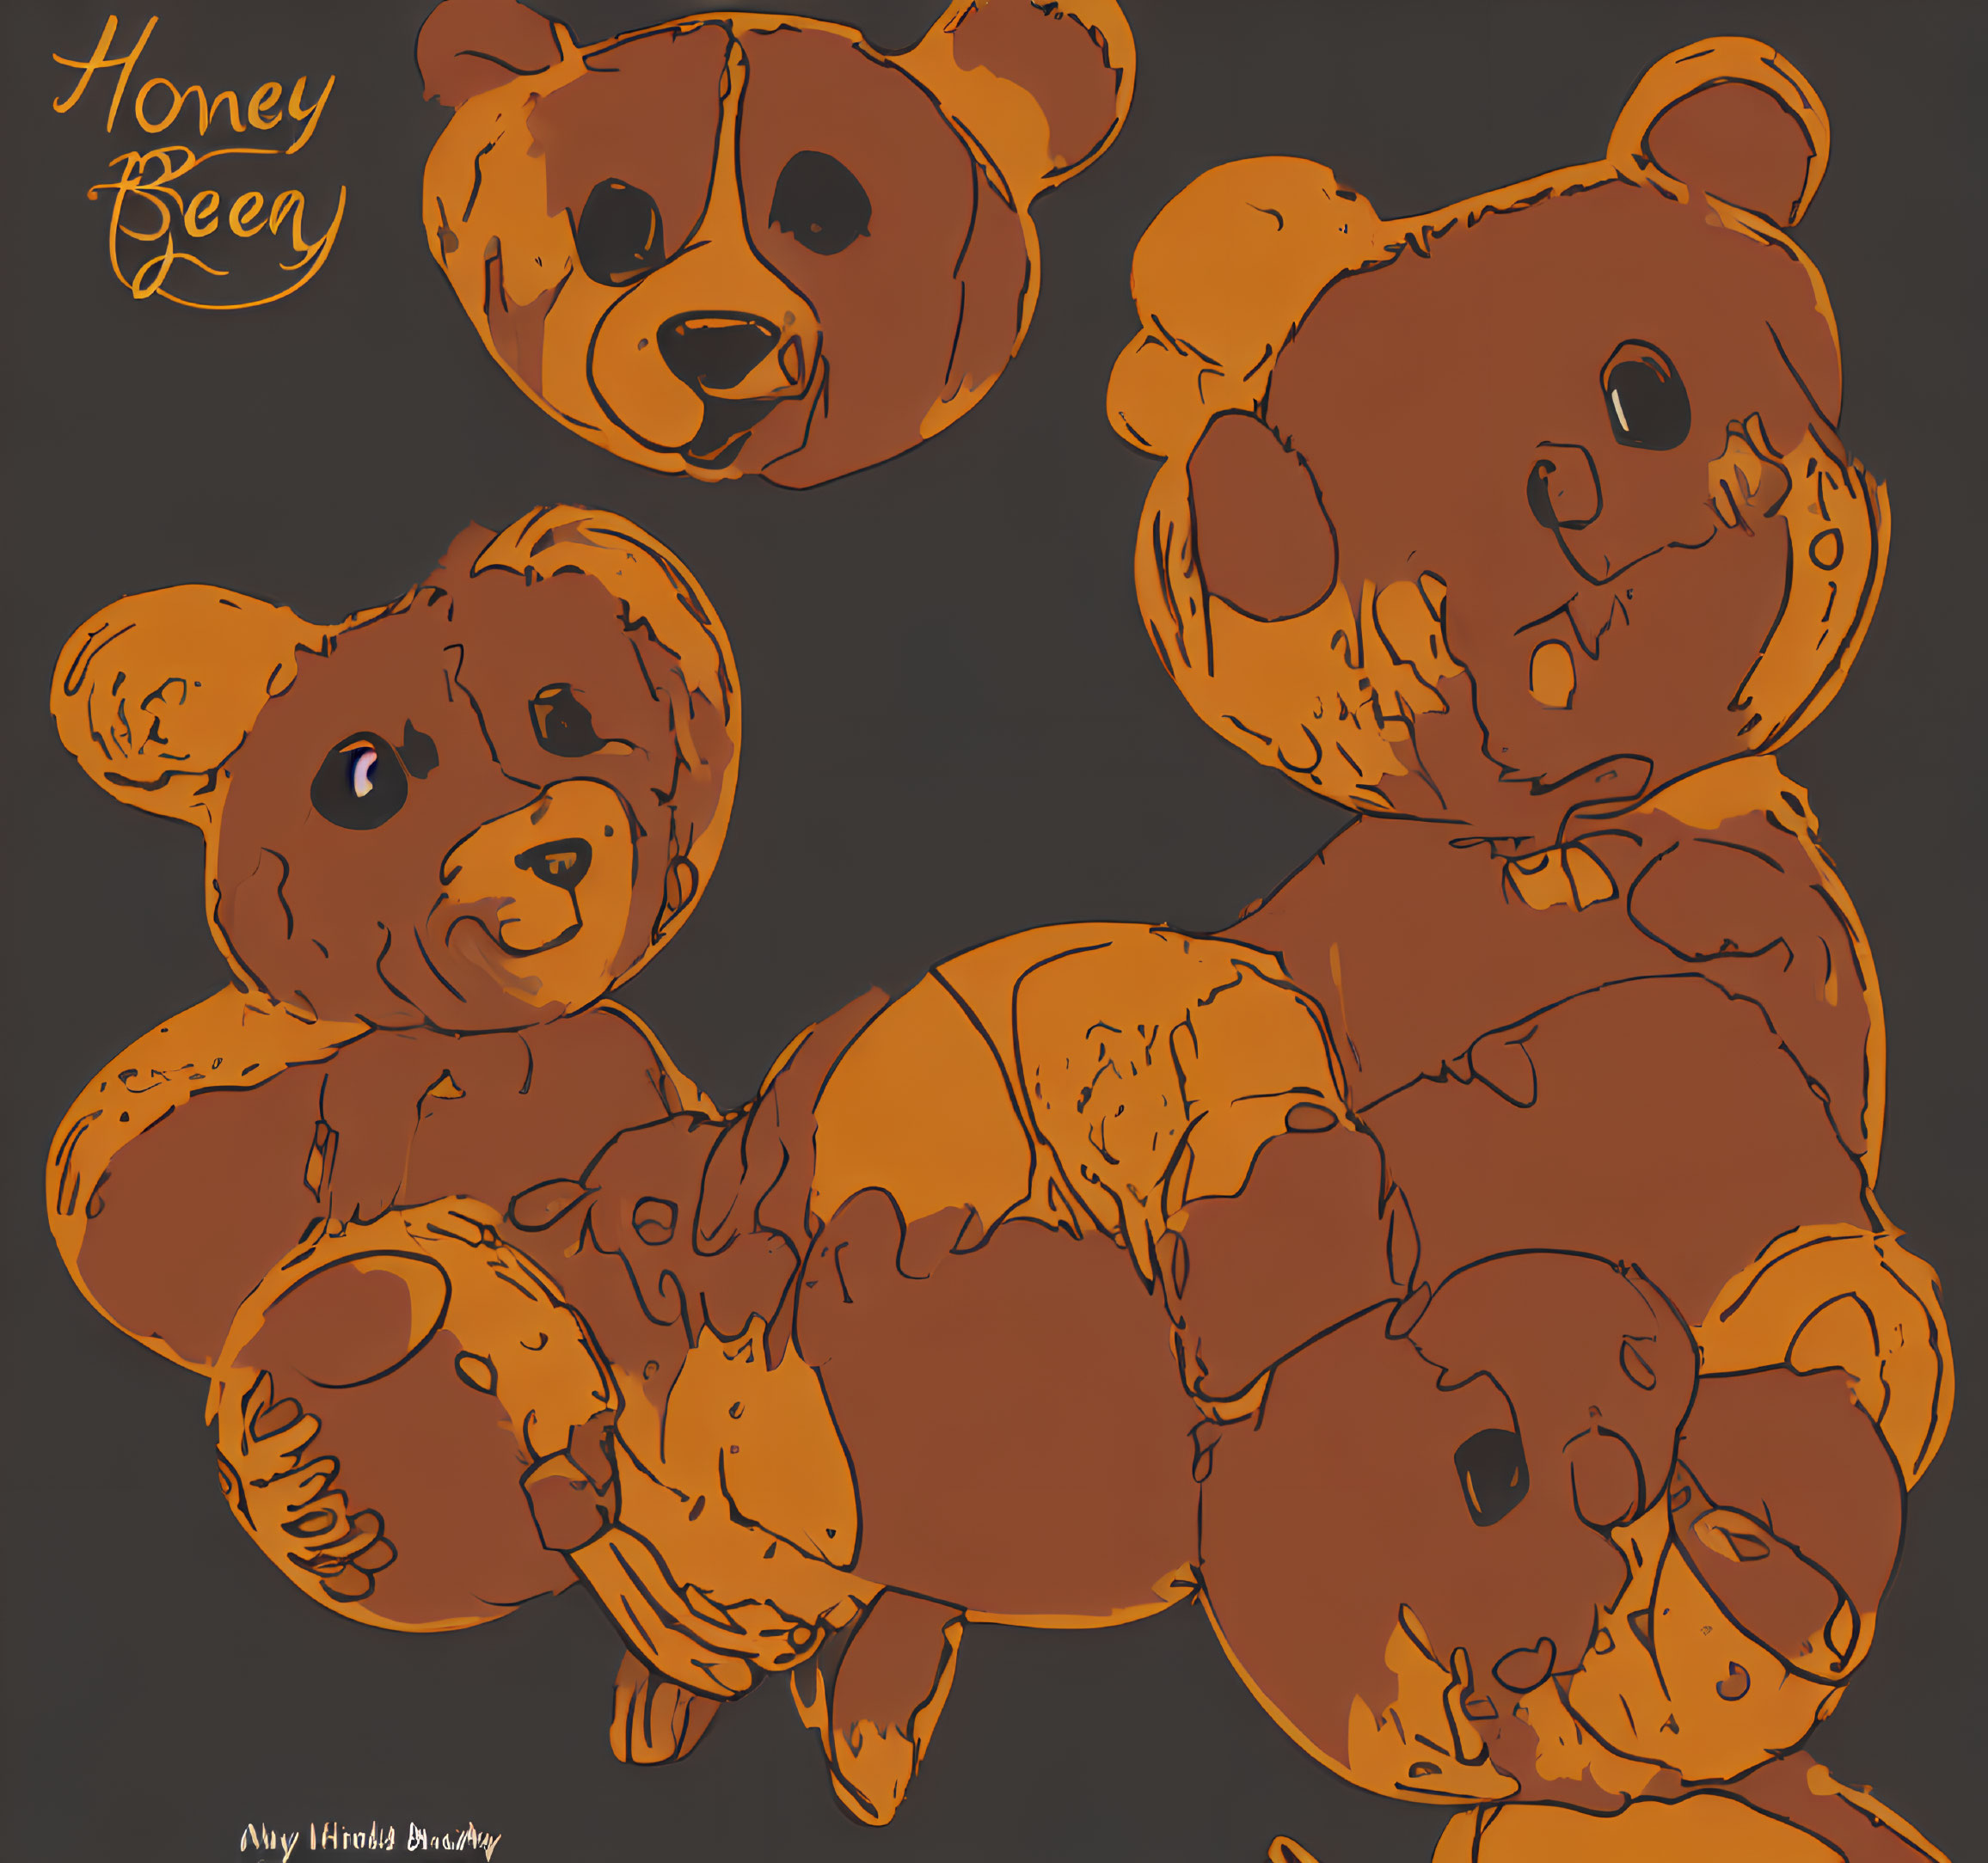 Stylized honey golden teddy bears illustration with artist's signature